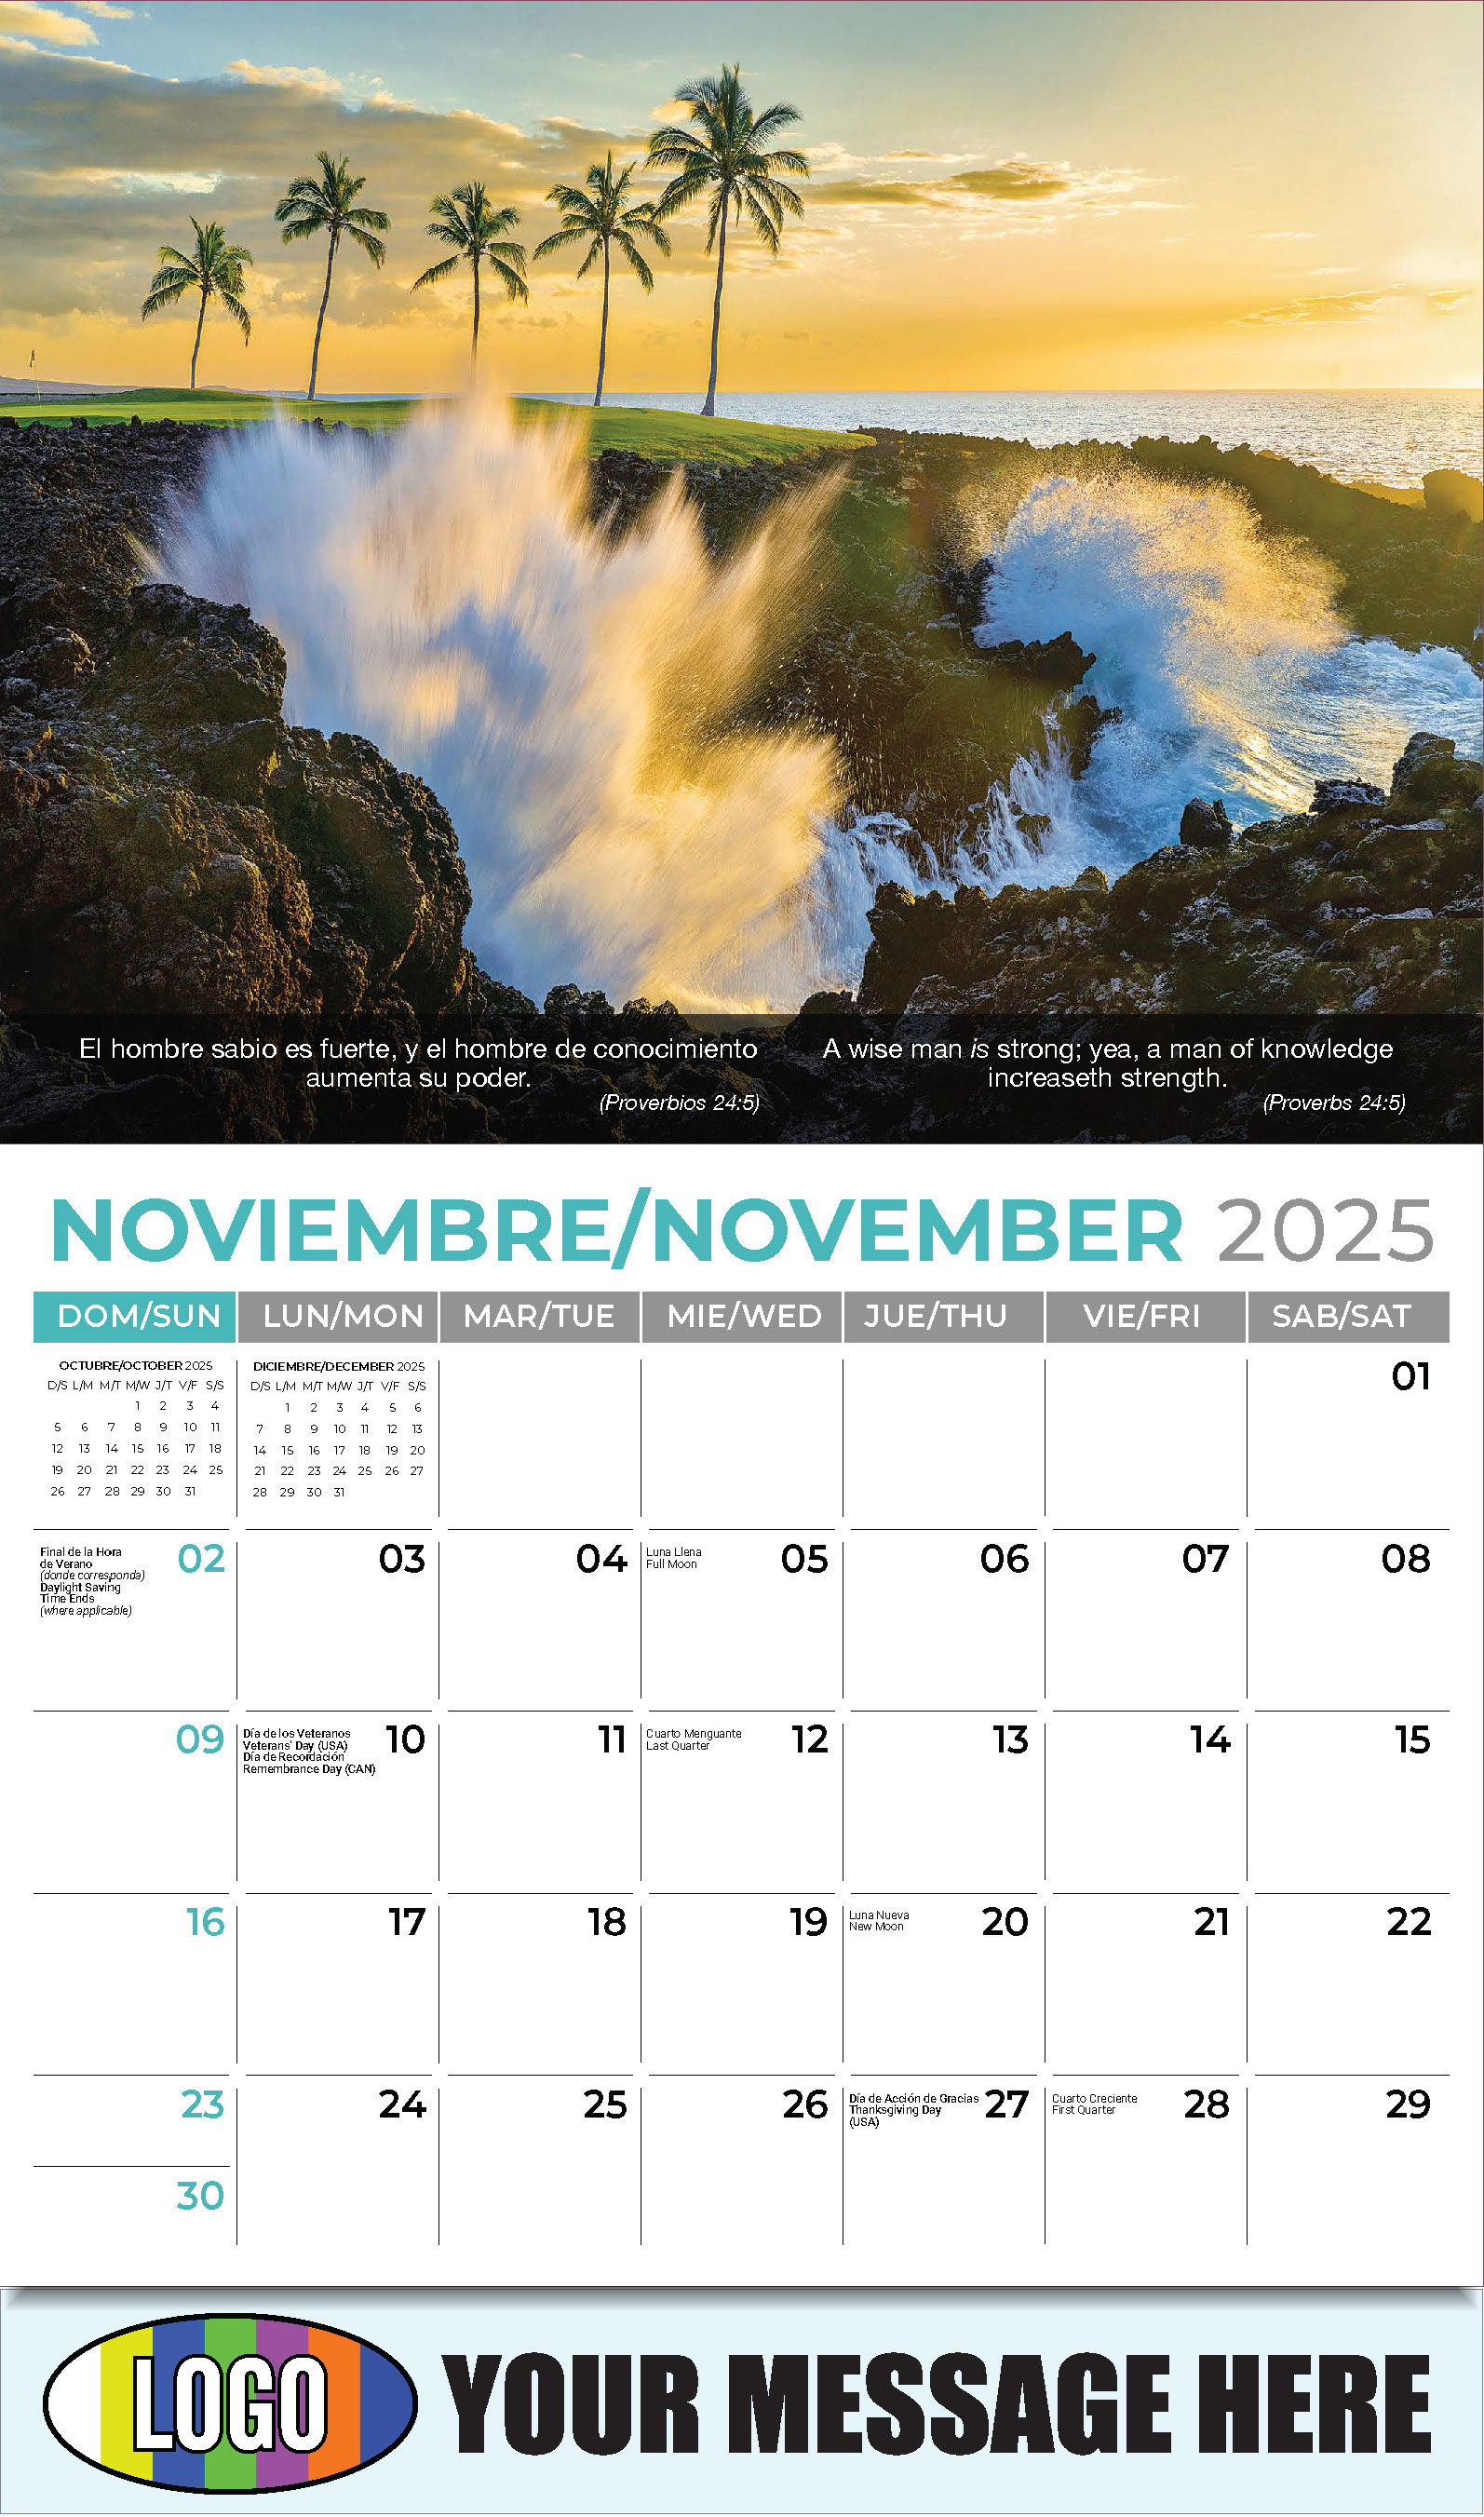 Faith Passages Bilingual 2025 Christian Business Advertising Calendar - November